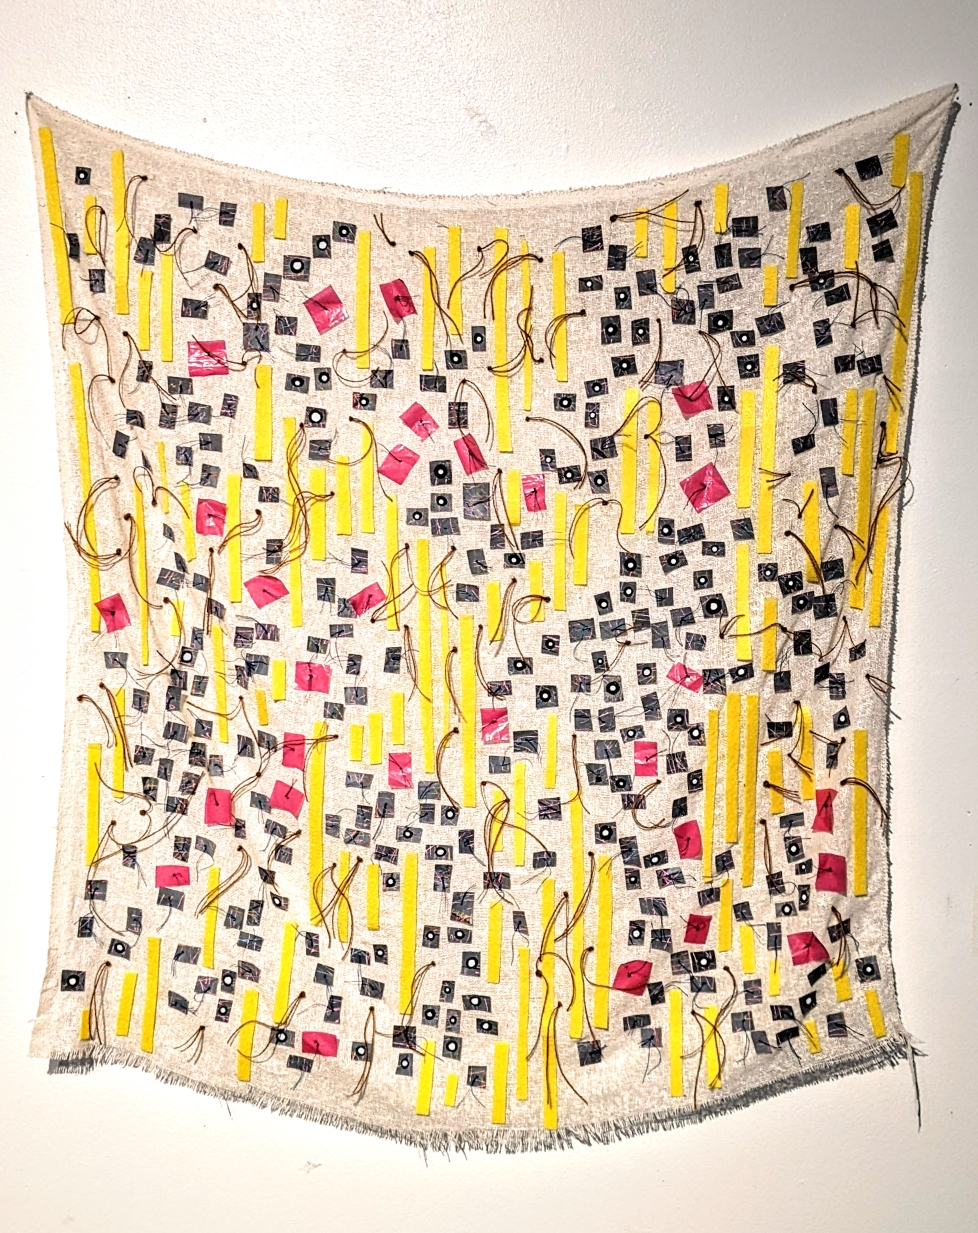 Nudos y Rezos. Silk and linen fabric, felt, plastic bag material, painted fabric pieces, threads. 22.5" x 25". Sandra Pérez-Ramos. 2022.